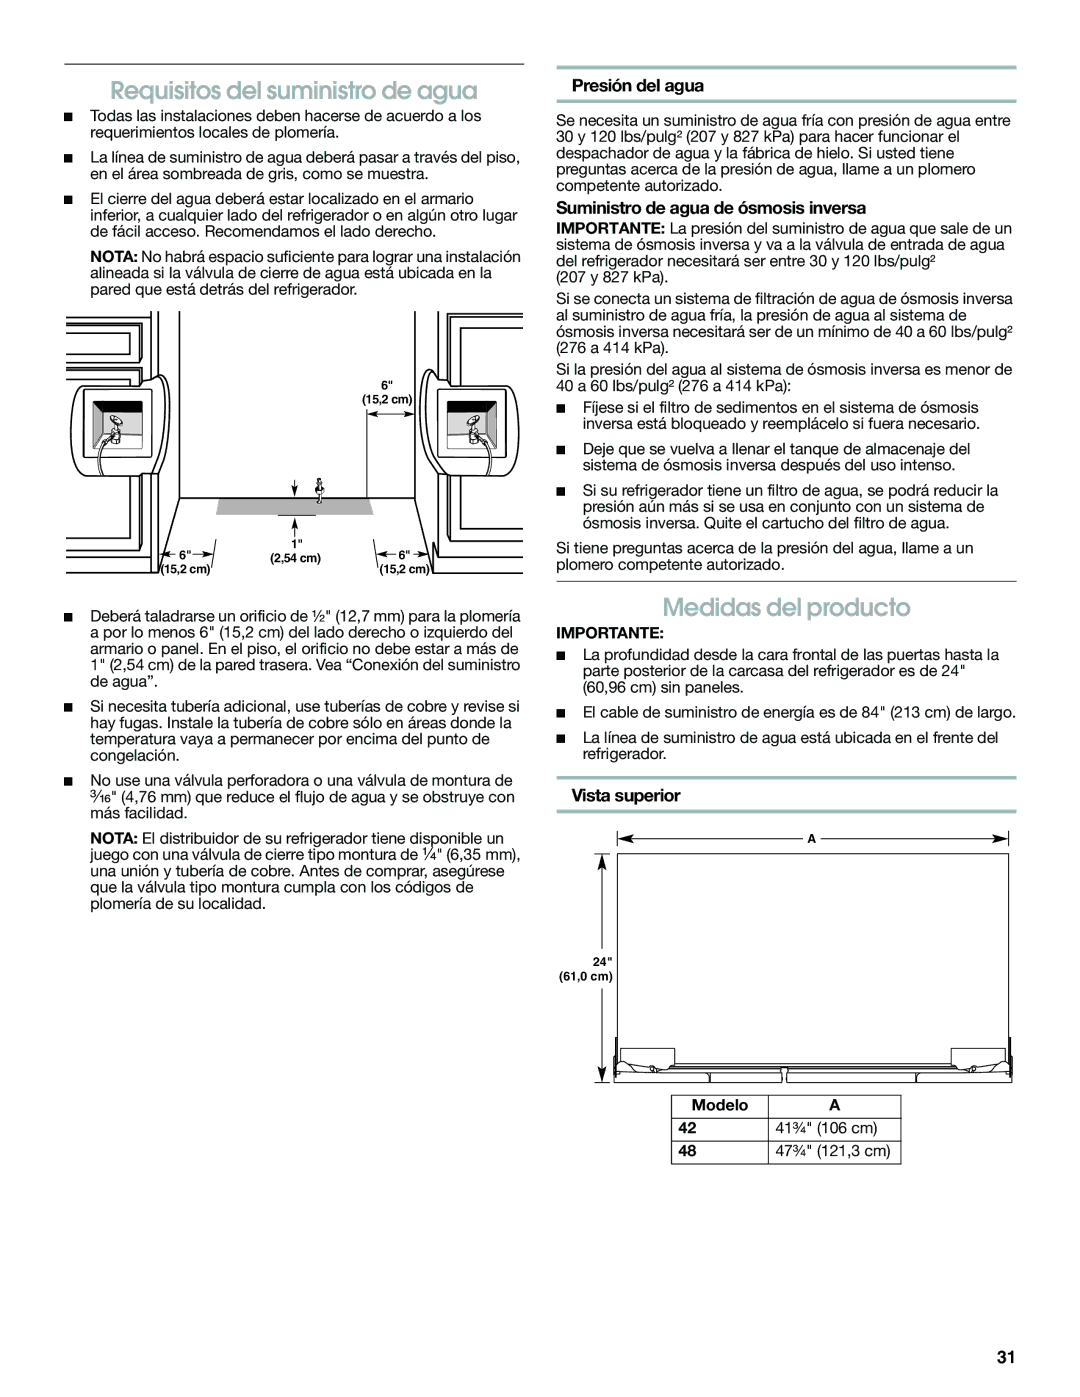 Jenn-Air W10379136A manual Requisitos del suministro de agua, Medidas del producto, Presión del agua, Vista superior 